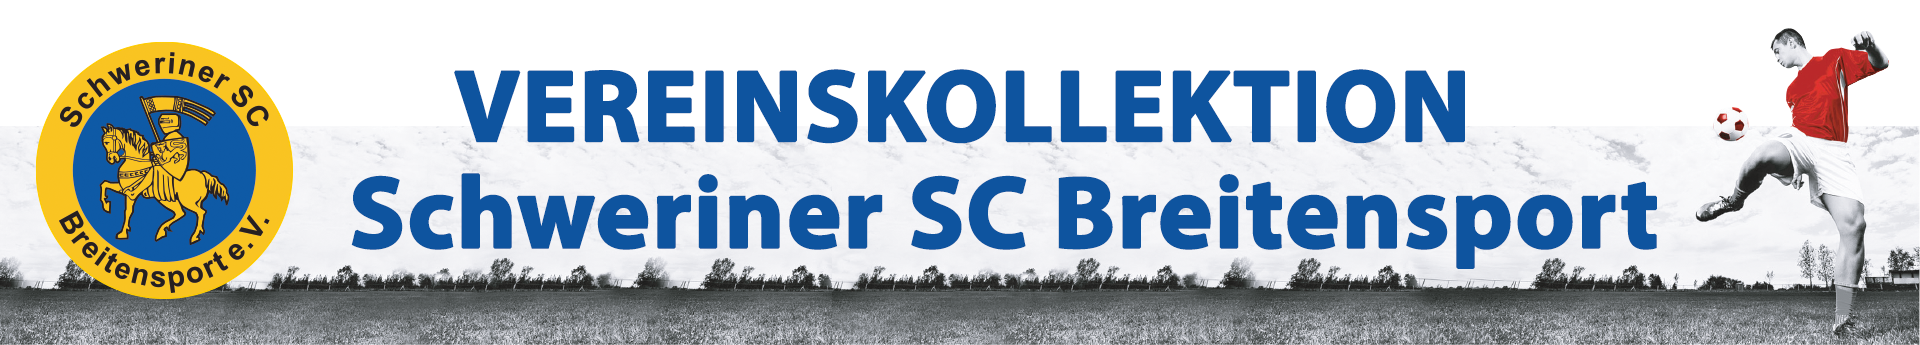 SSC-Breitensport Title Image